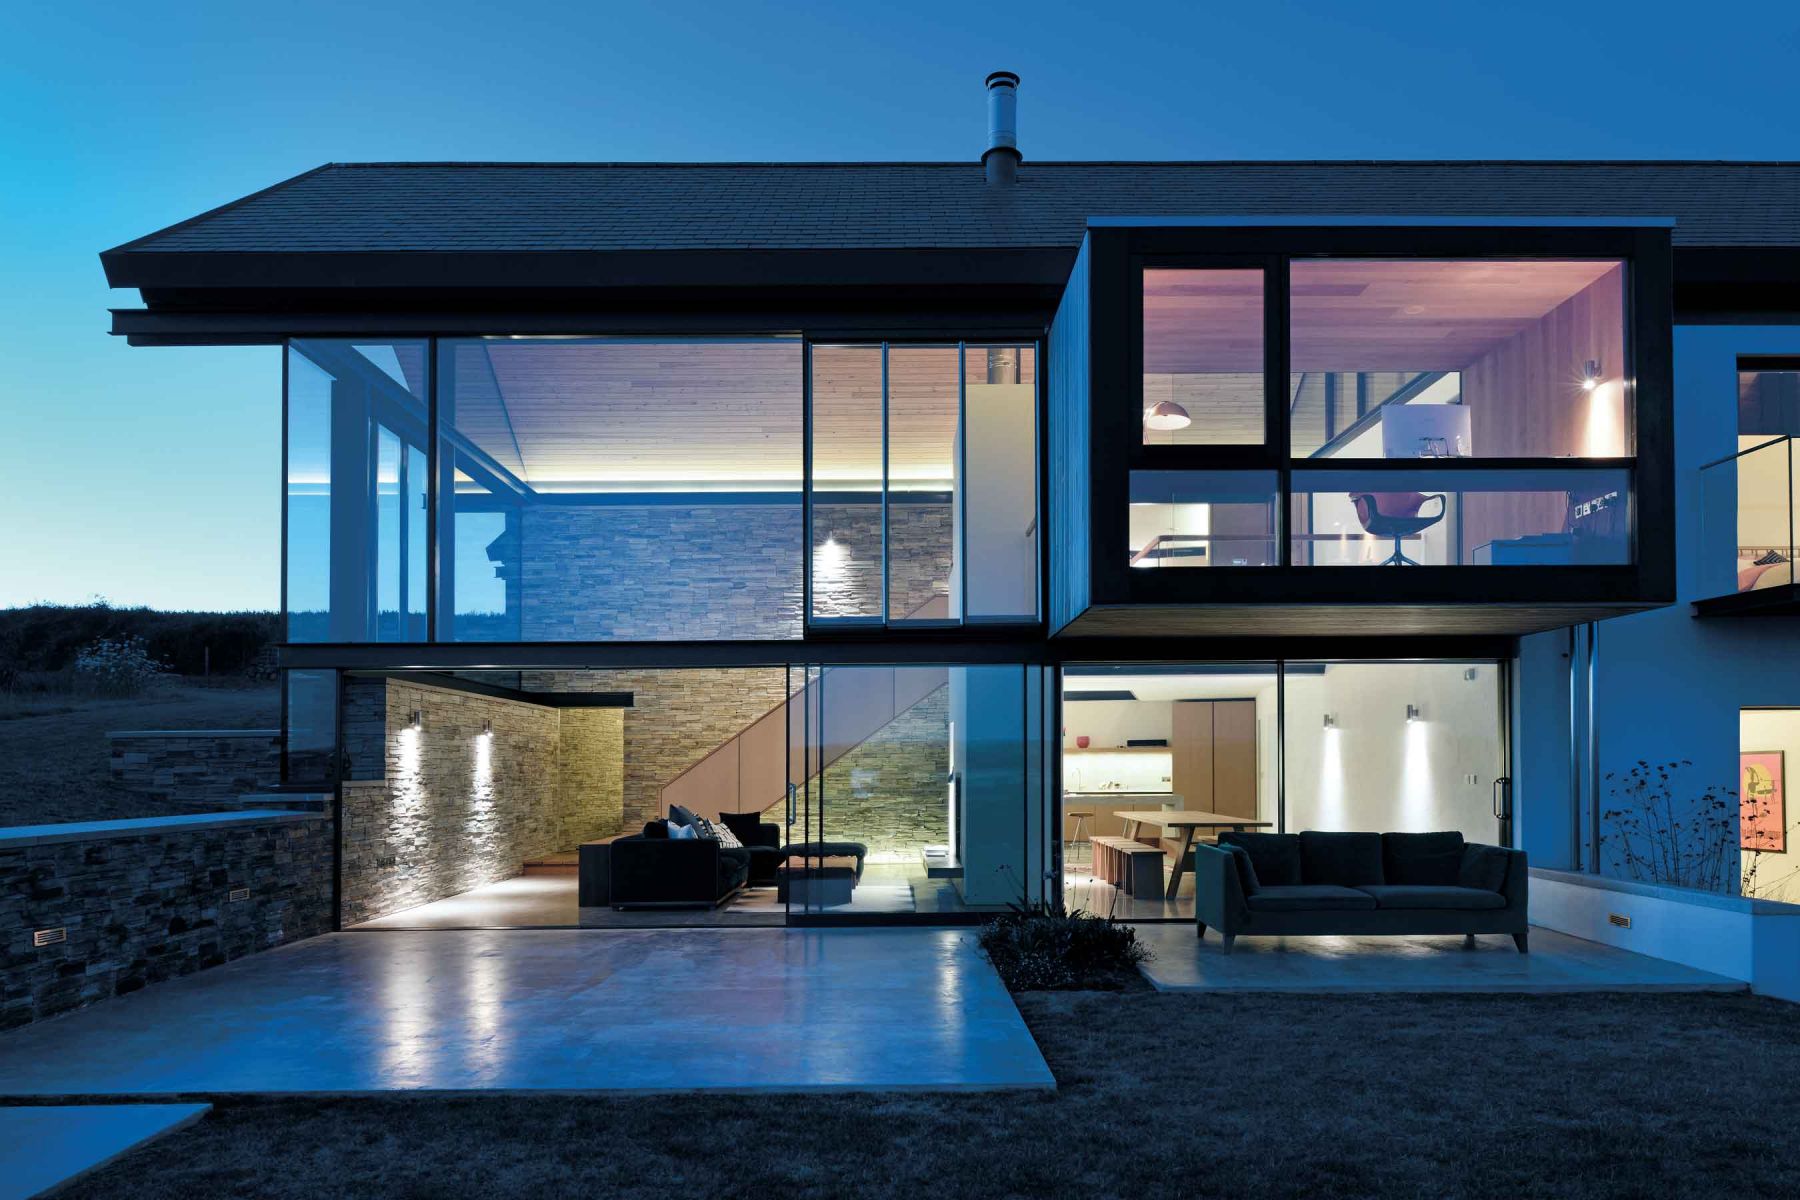 Property designed by Stan Bolt: Architect